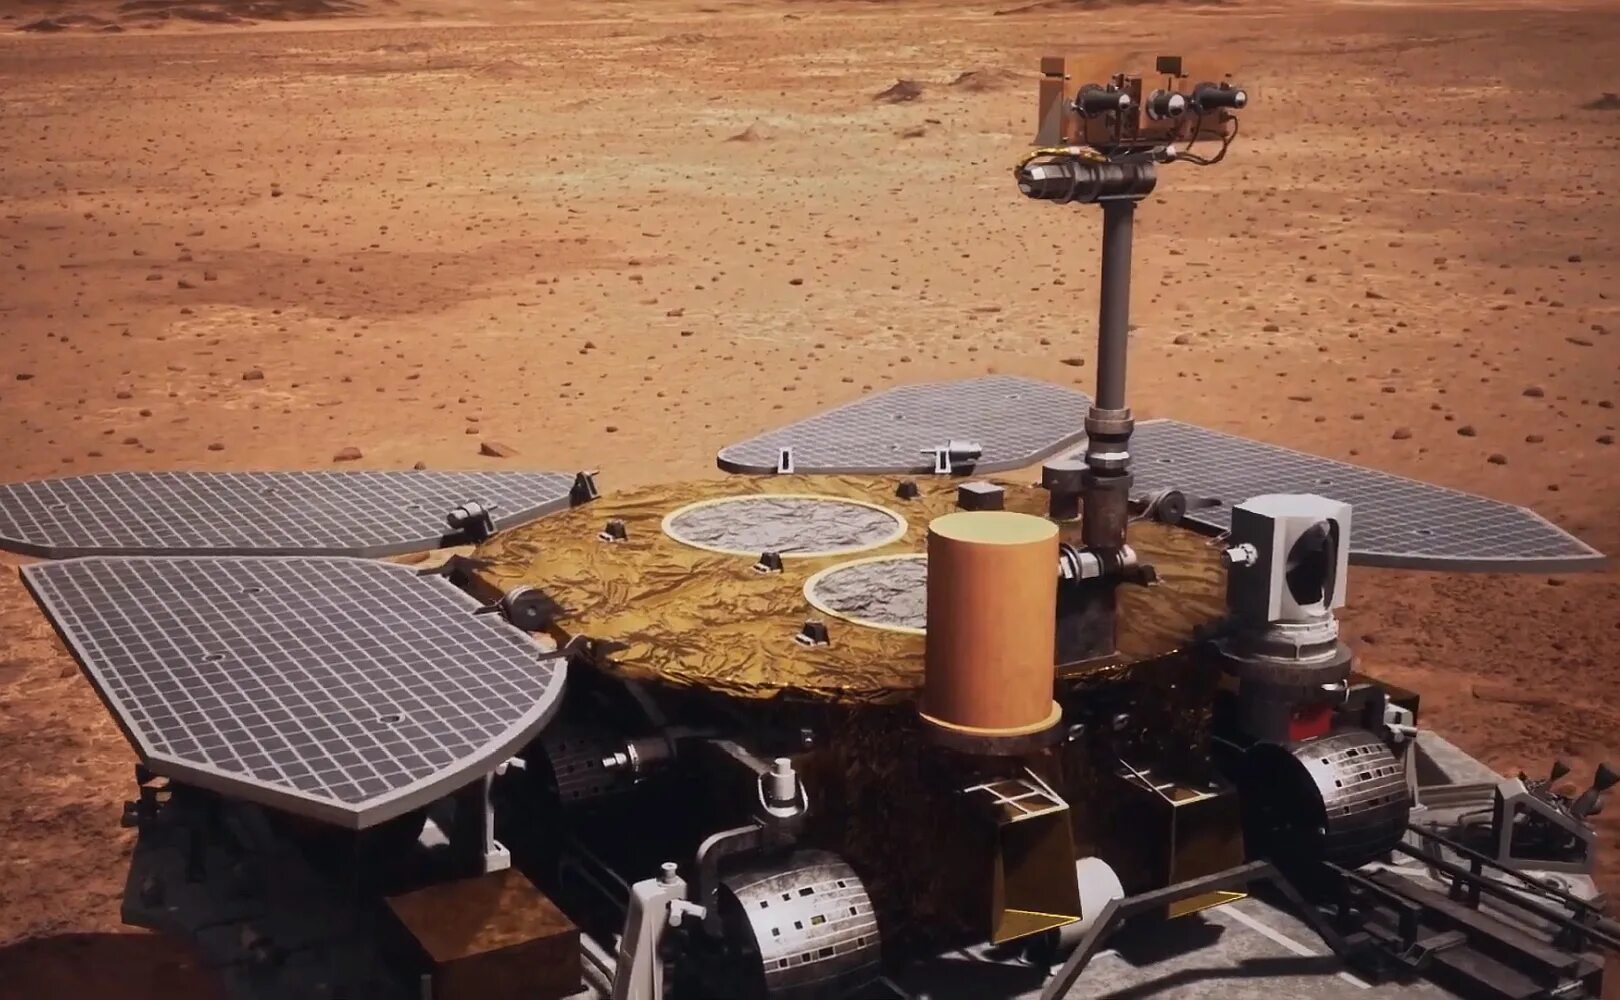 Марсианский зонд. Китайский марсоход «Чжужун». Марсоход Чжужун на Марсе. Китайский марсоход 2021. Китайский марсоход на Марсе.